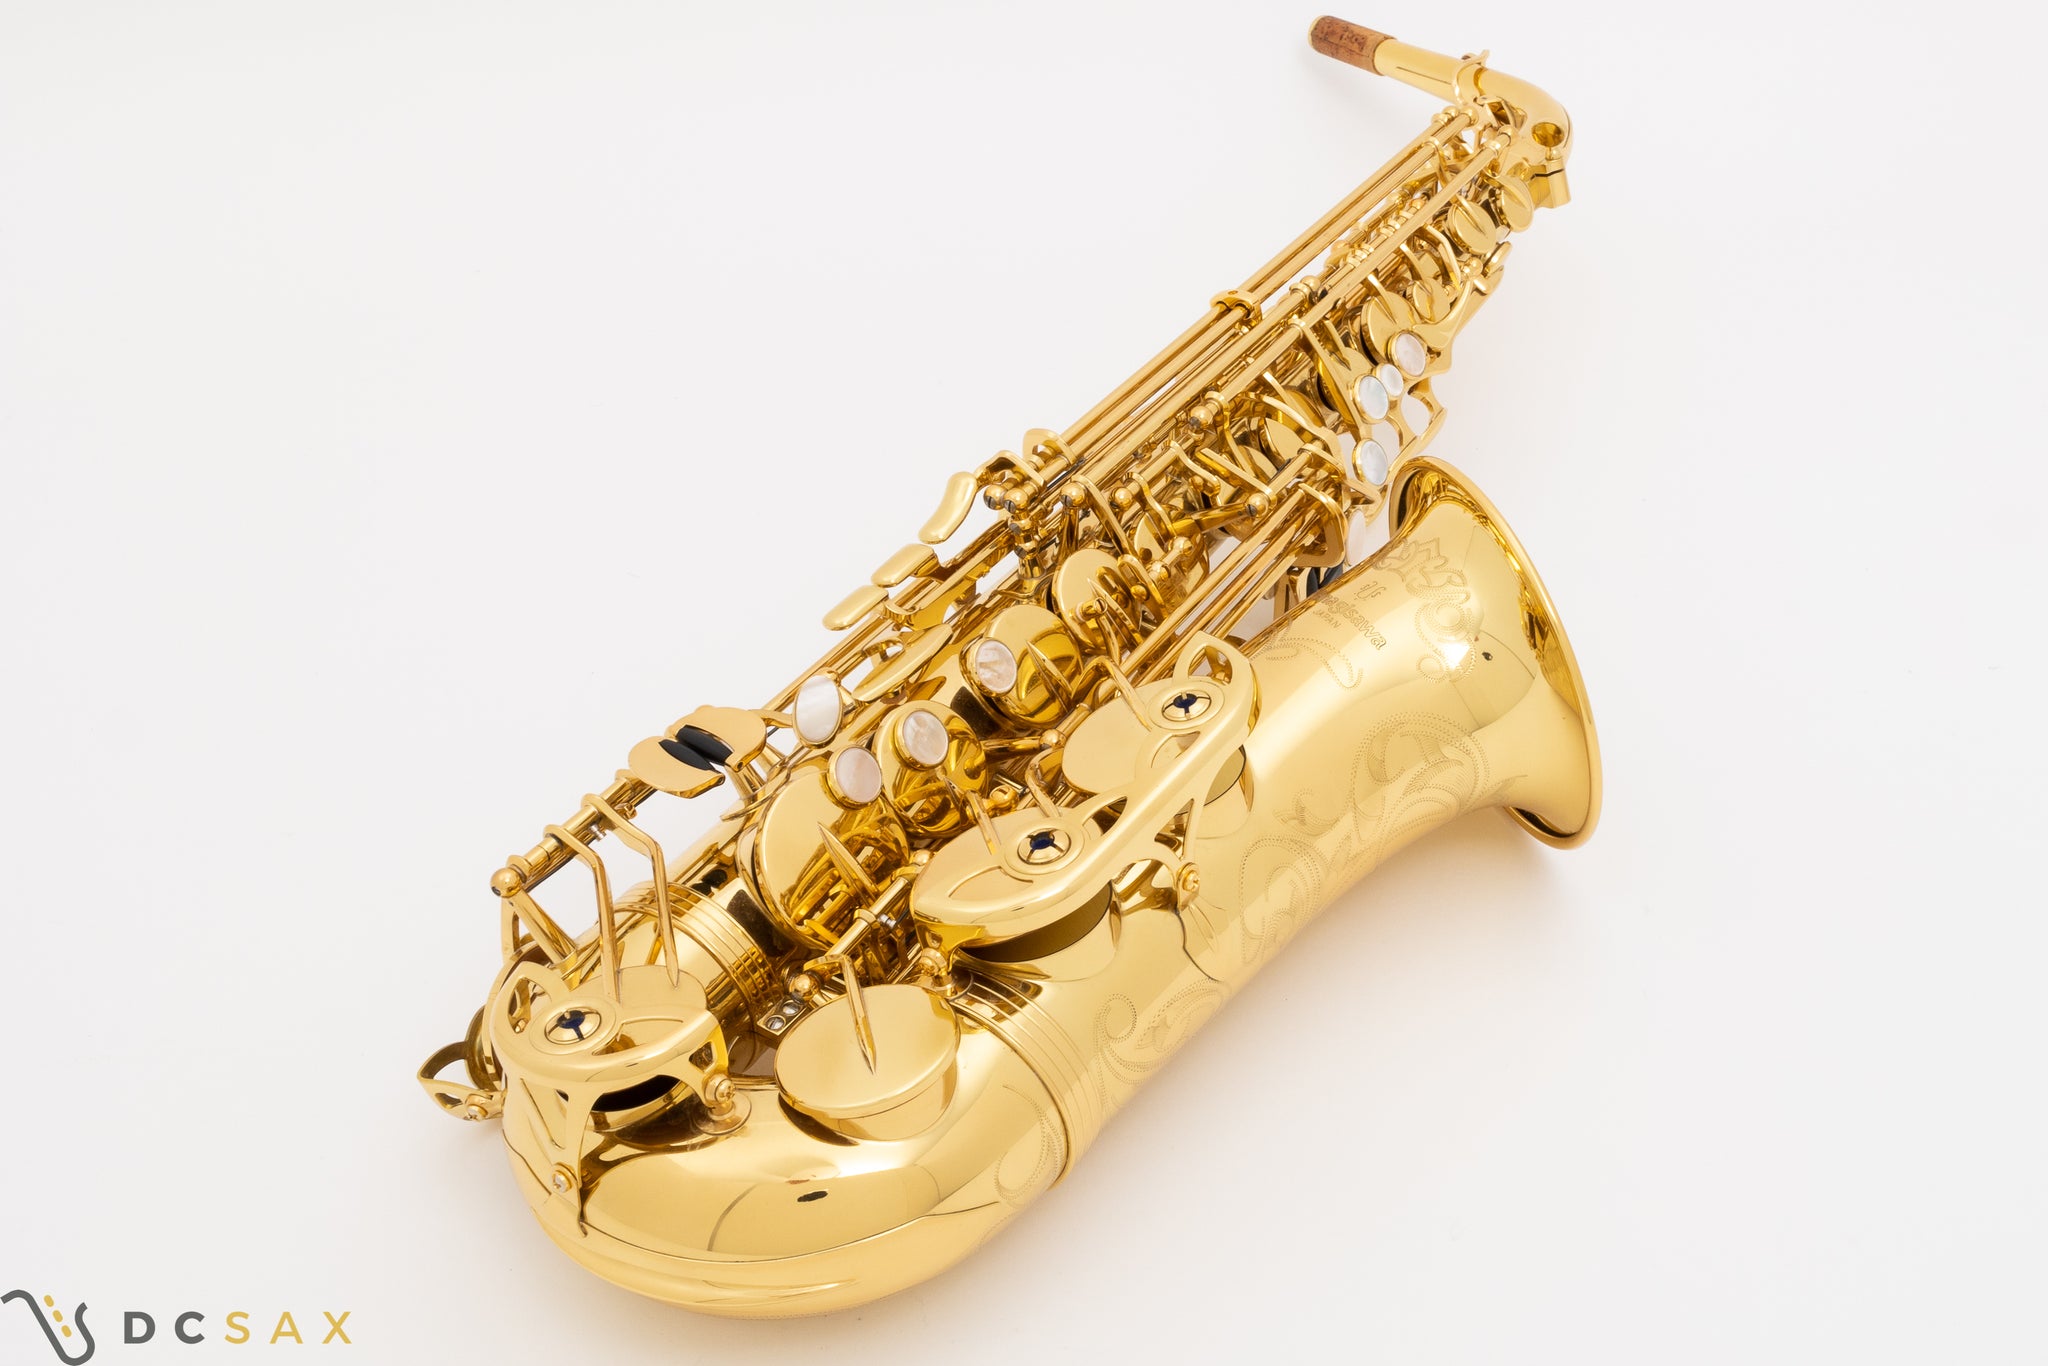 Yanagisawa A-WO10 Alto Saxophone, Just Serviced, Mint Condition